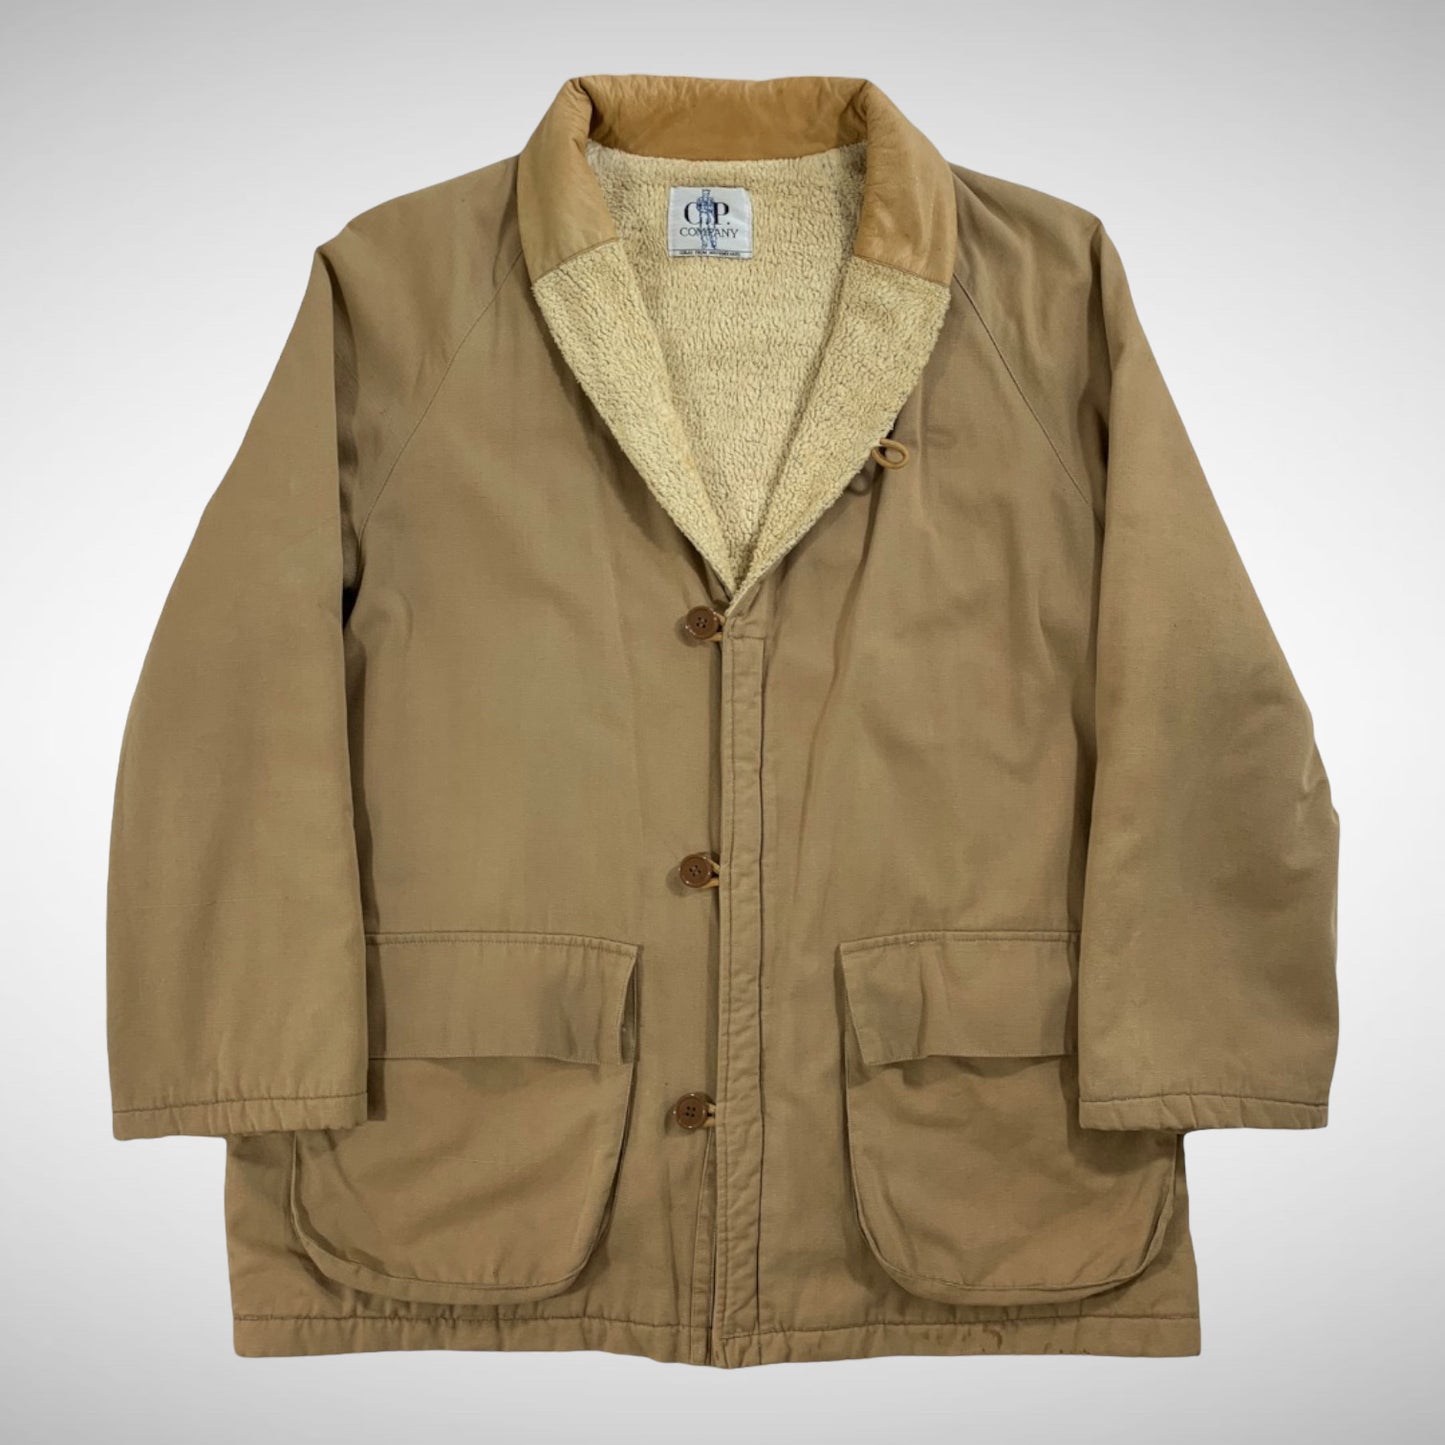 CP Company Wool/Cotton Coat (1980s)